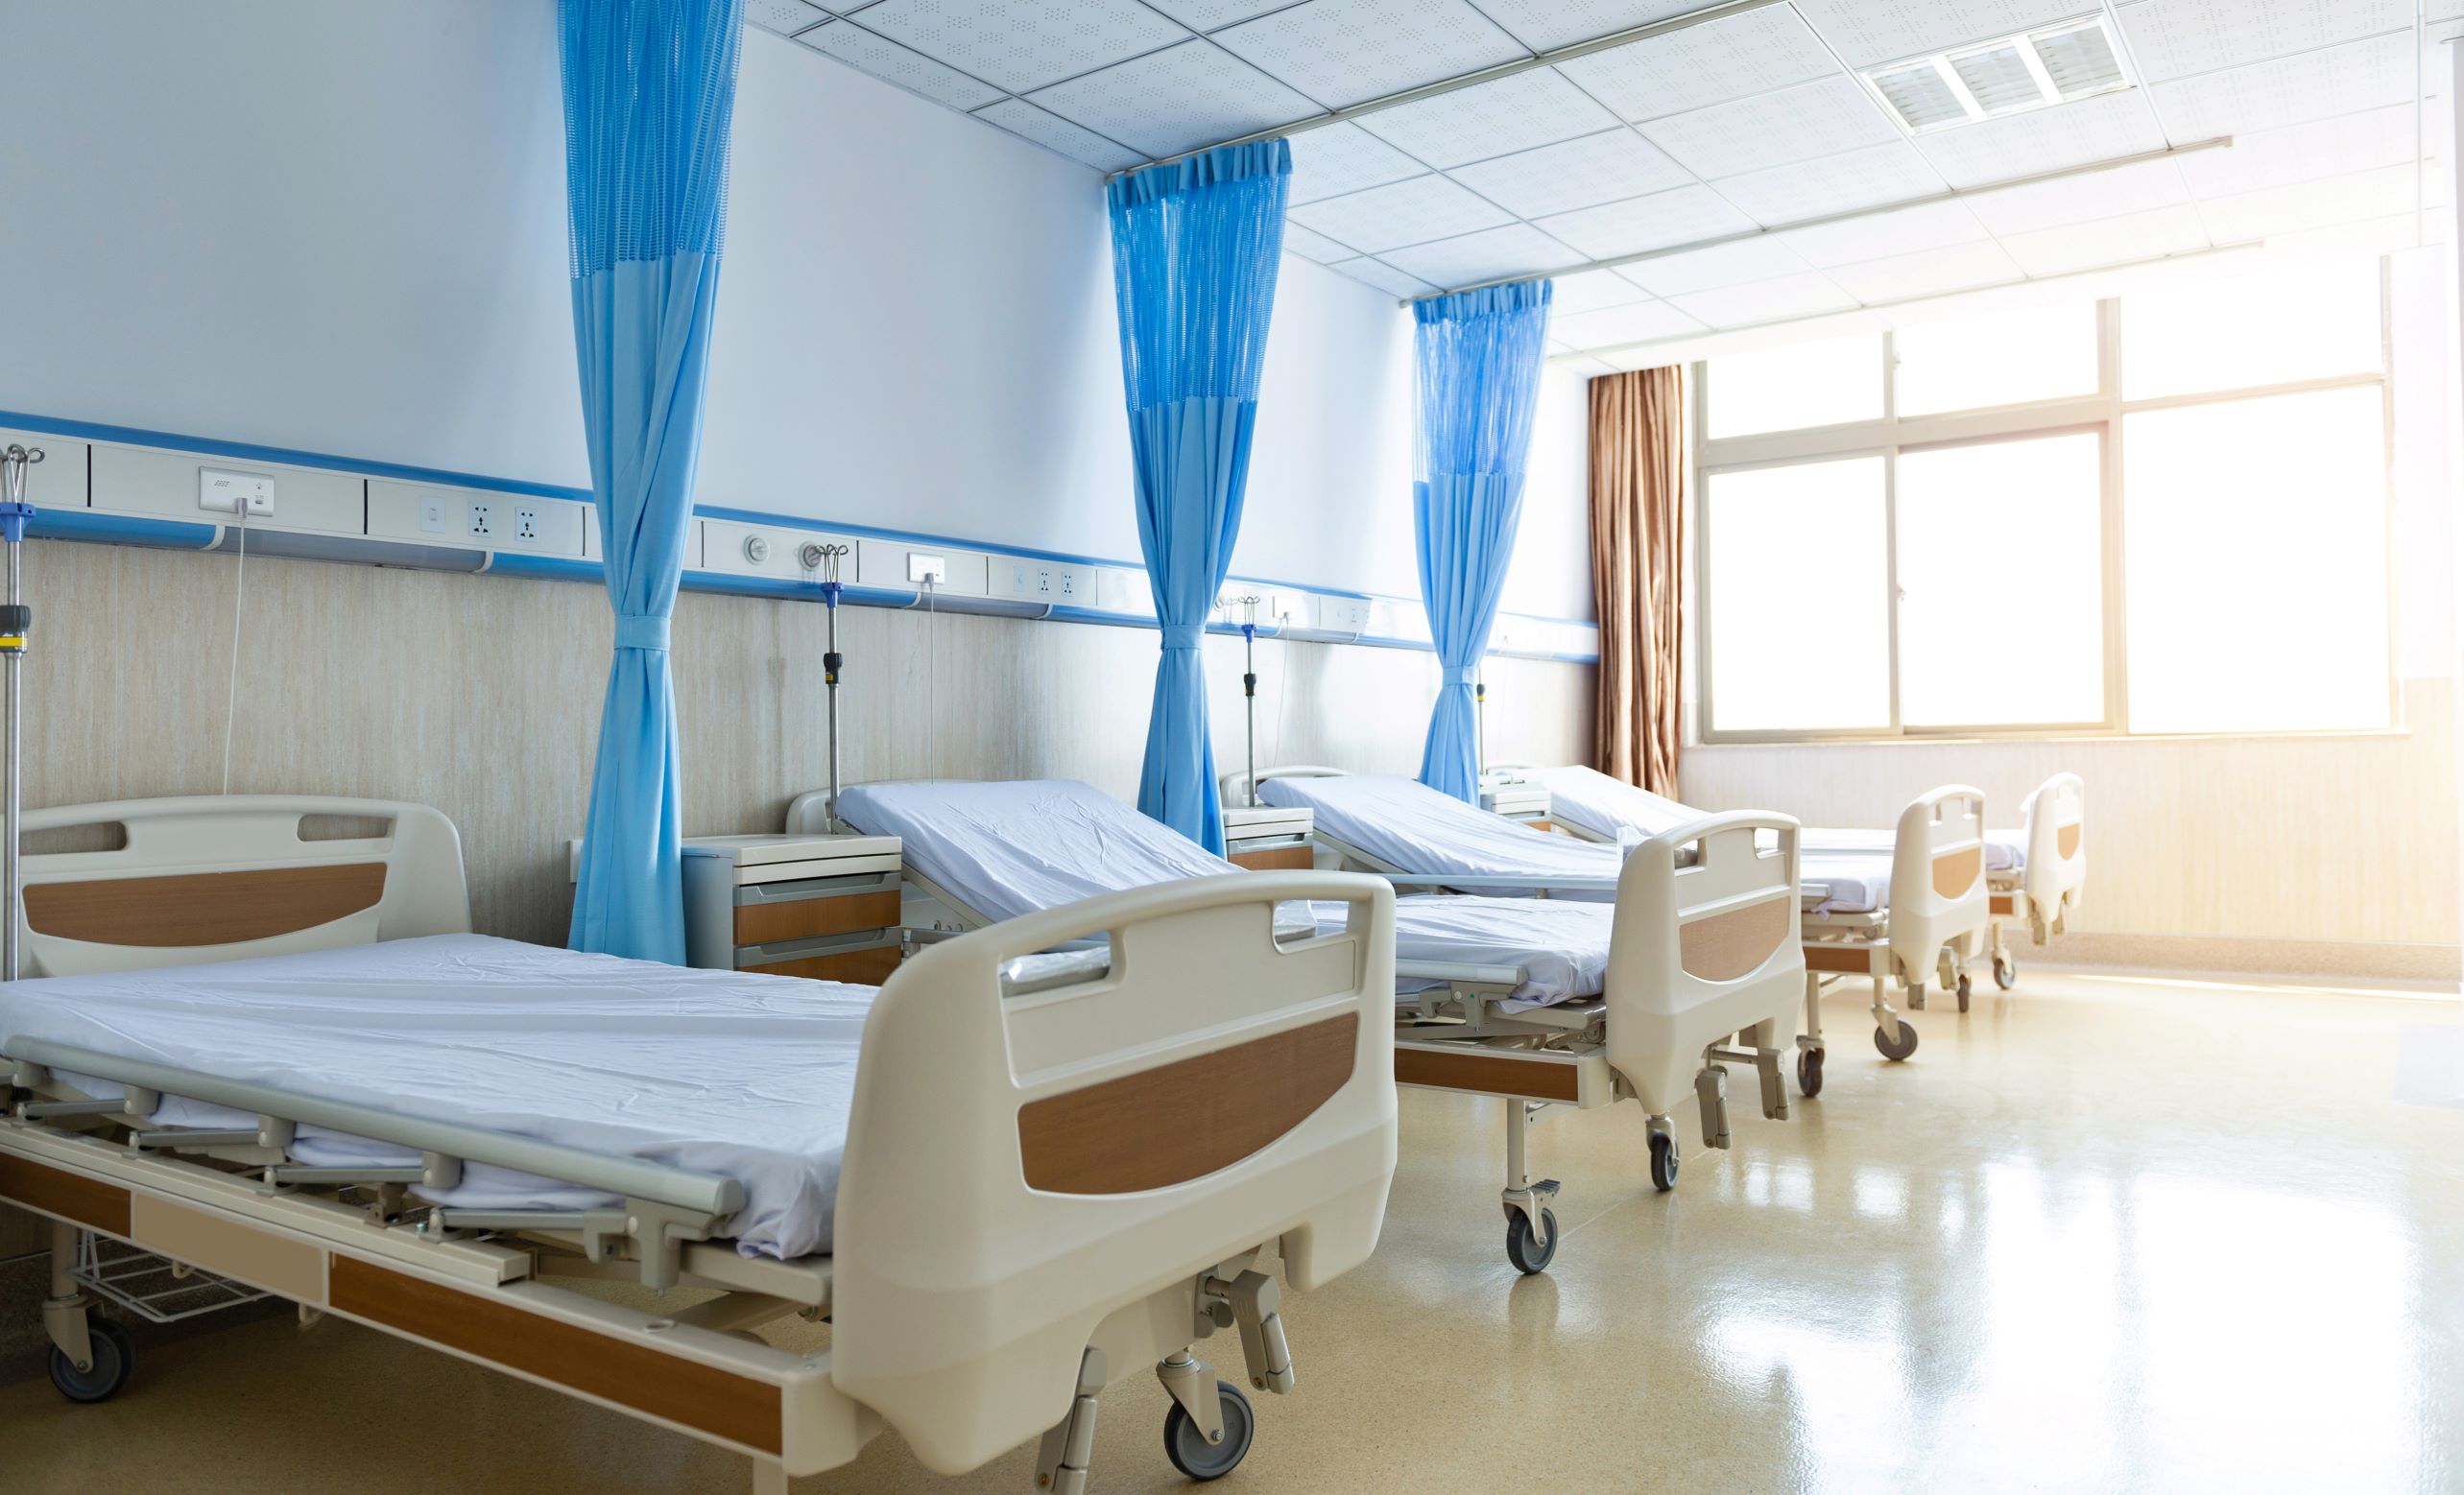 HomeCare Hospital Beds - Home Medical Equipment